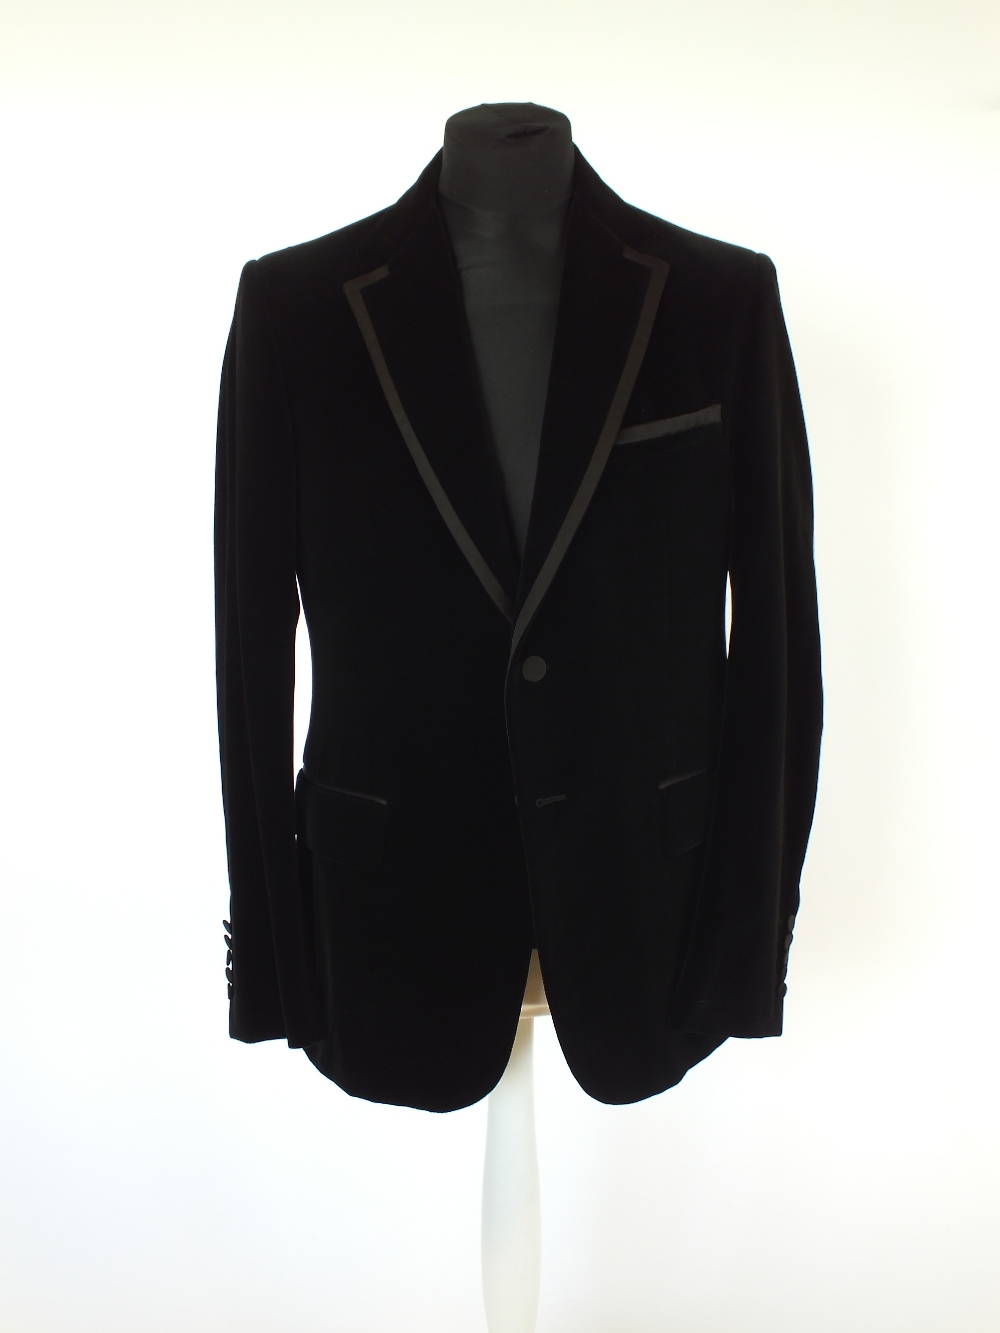 A Gucci dinner jacket, black, velvet, satin edging, lined, Italian size 52R, 78% cotton, 24% silk,